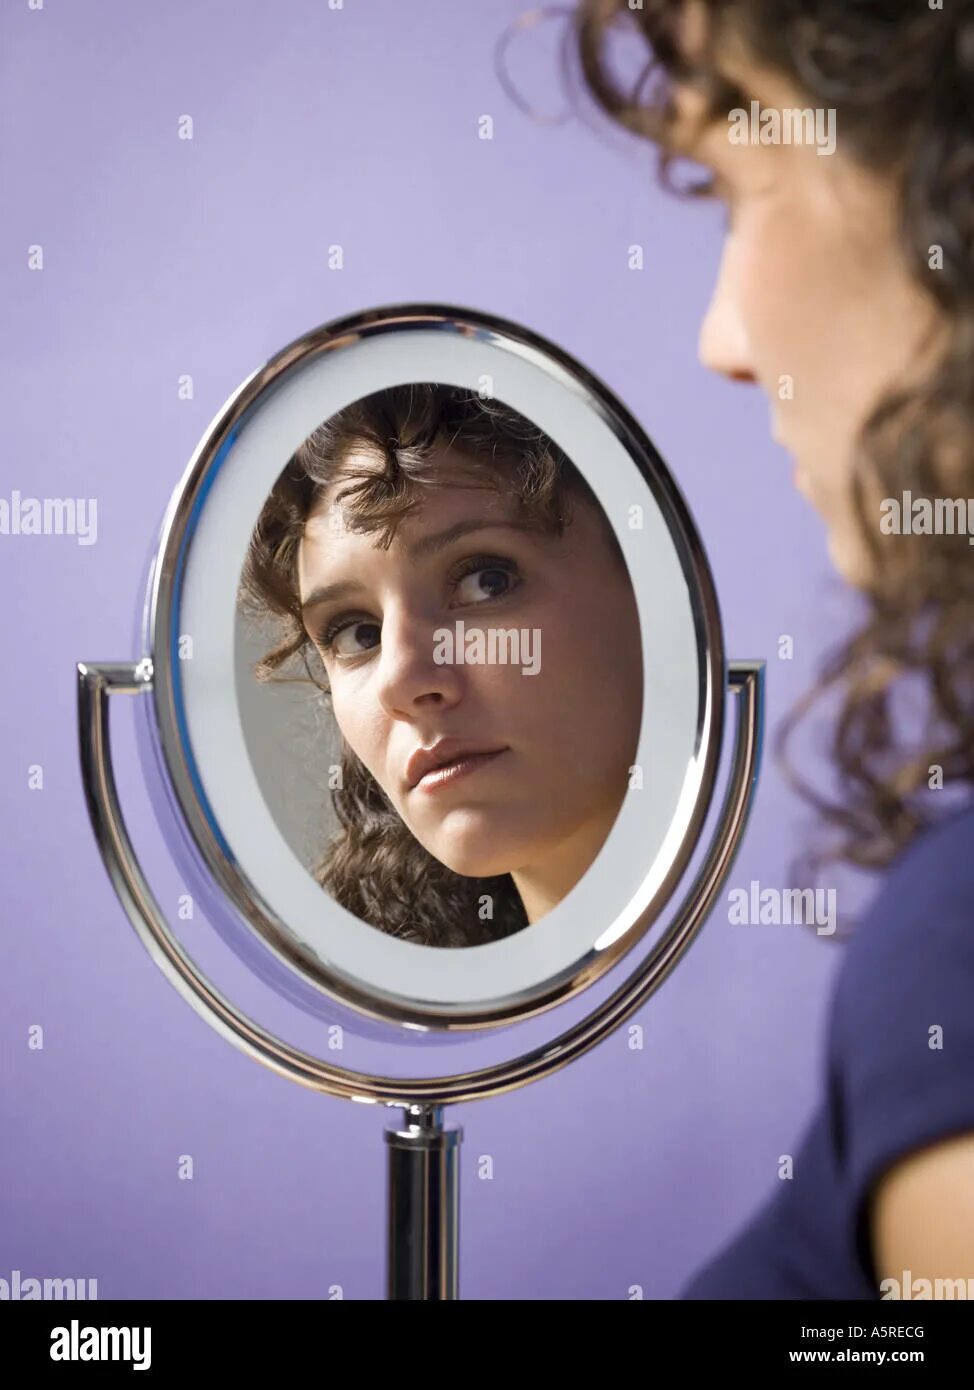 Часы и зеркало анализ. ЛОВУШКА для женщины зеркало. Взгляд на себя со стороны. Girl at the Mirror. The broken Mirror.